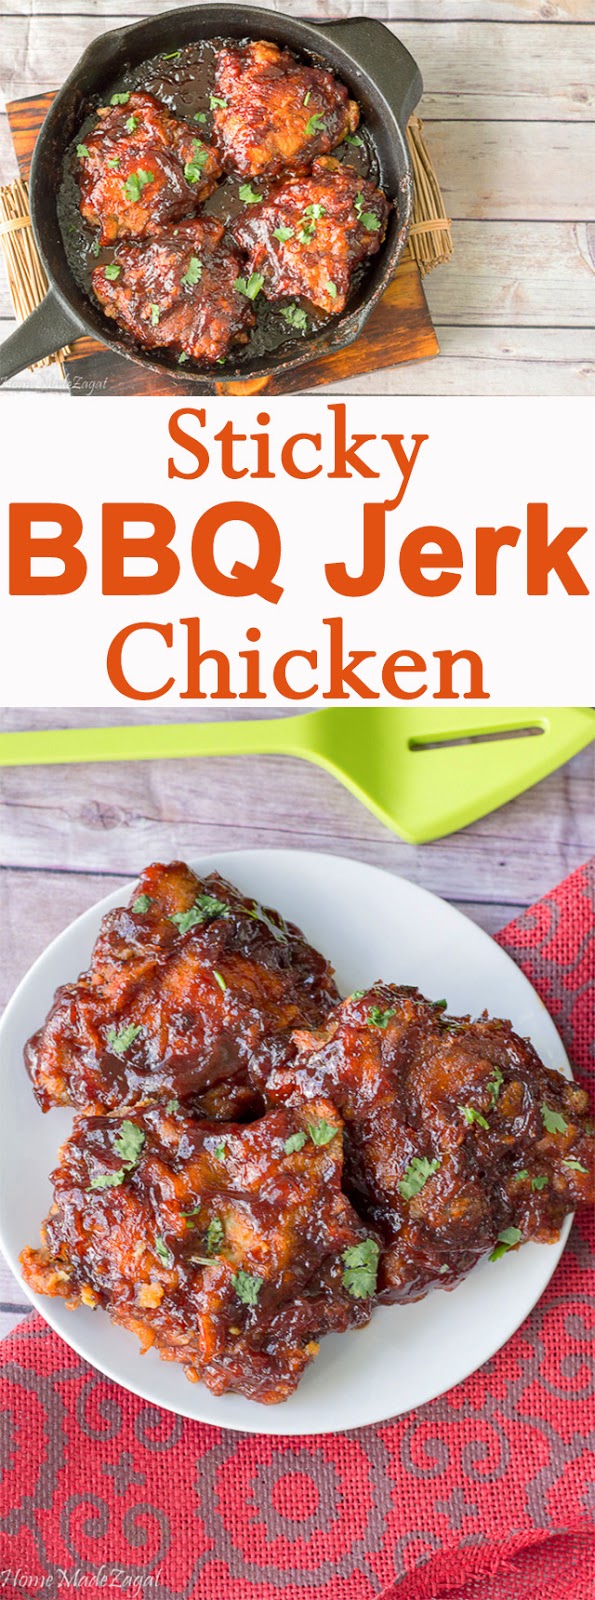 BBQ chicken with jerk seasoning